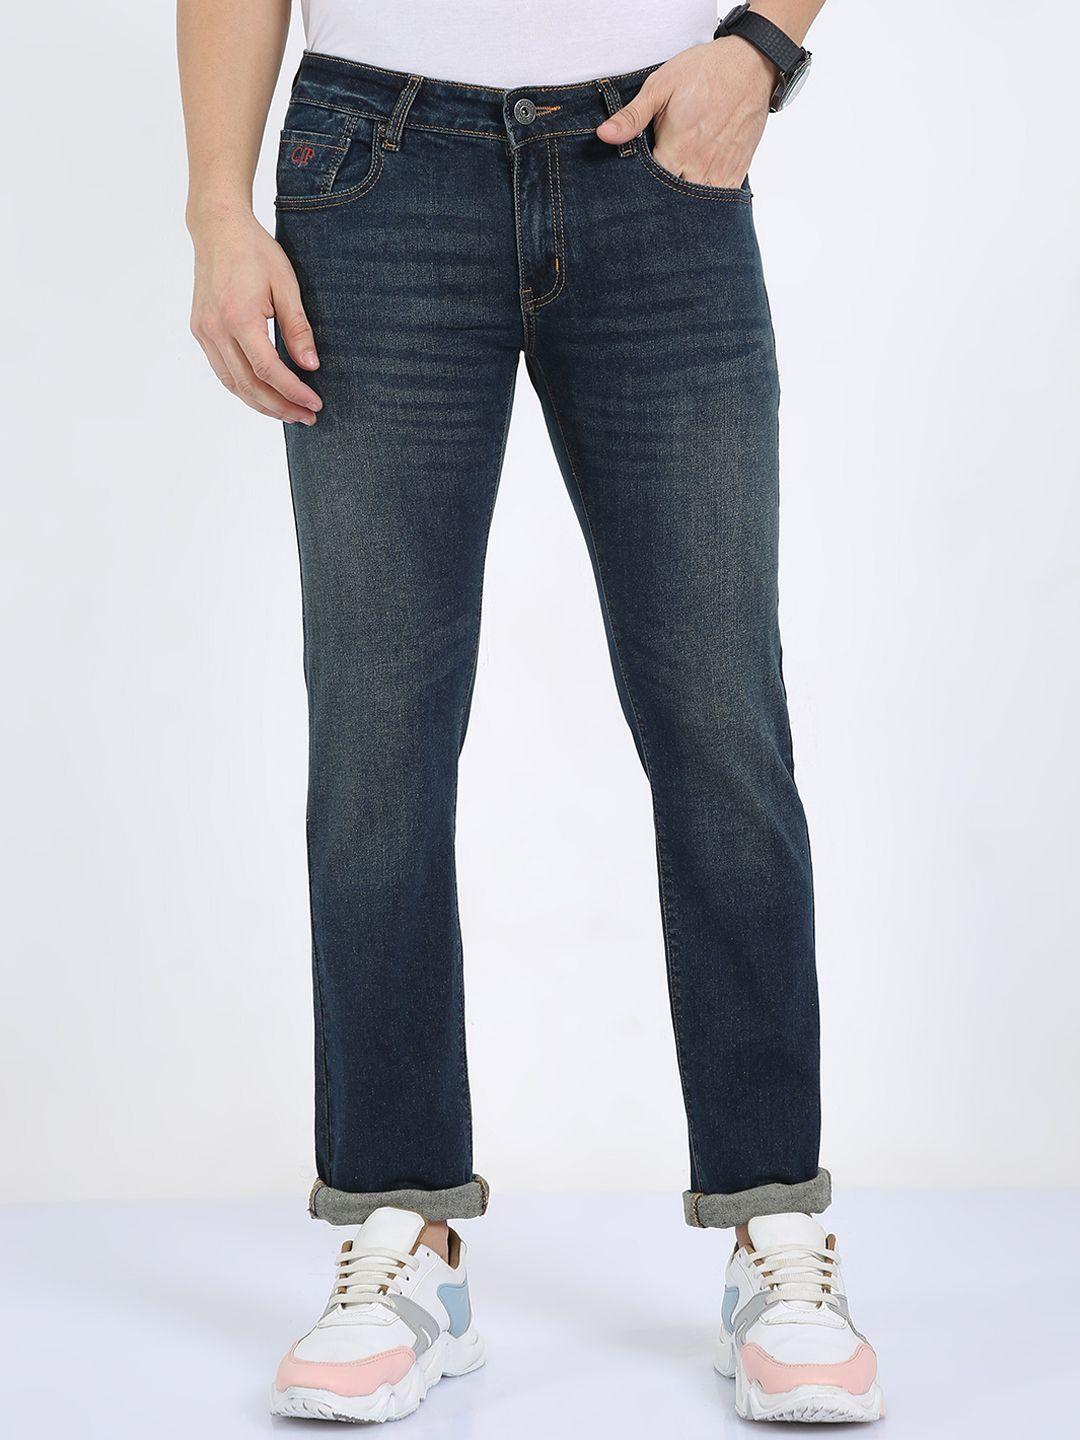 classic-polo-men-jean-slim-fit-light-fade-cotton-denim-mid-rise-jeans